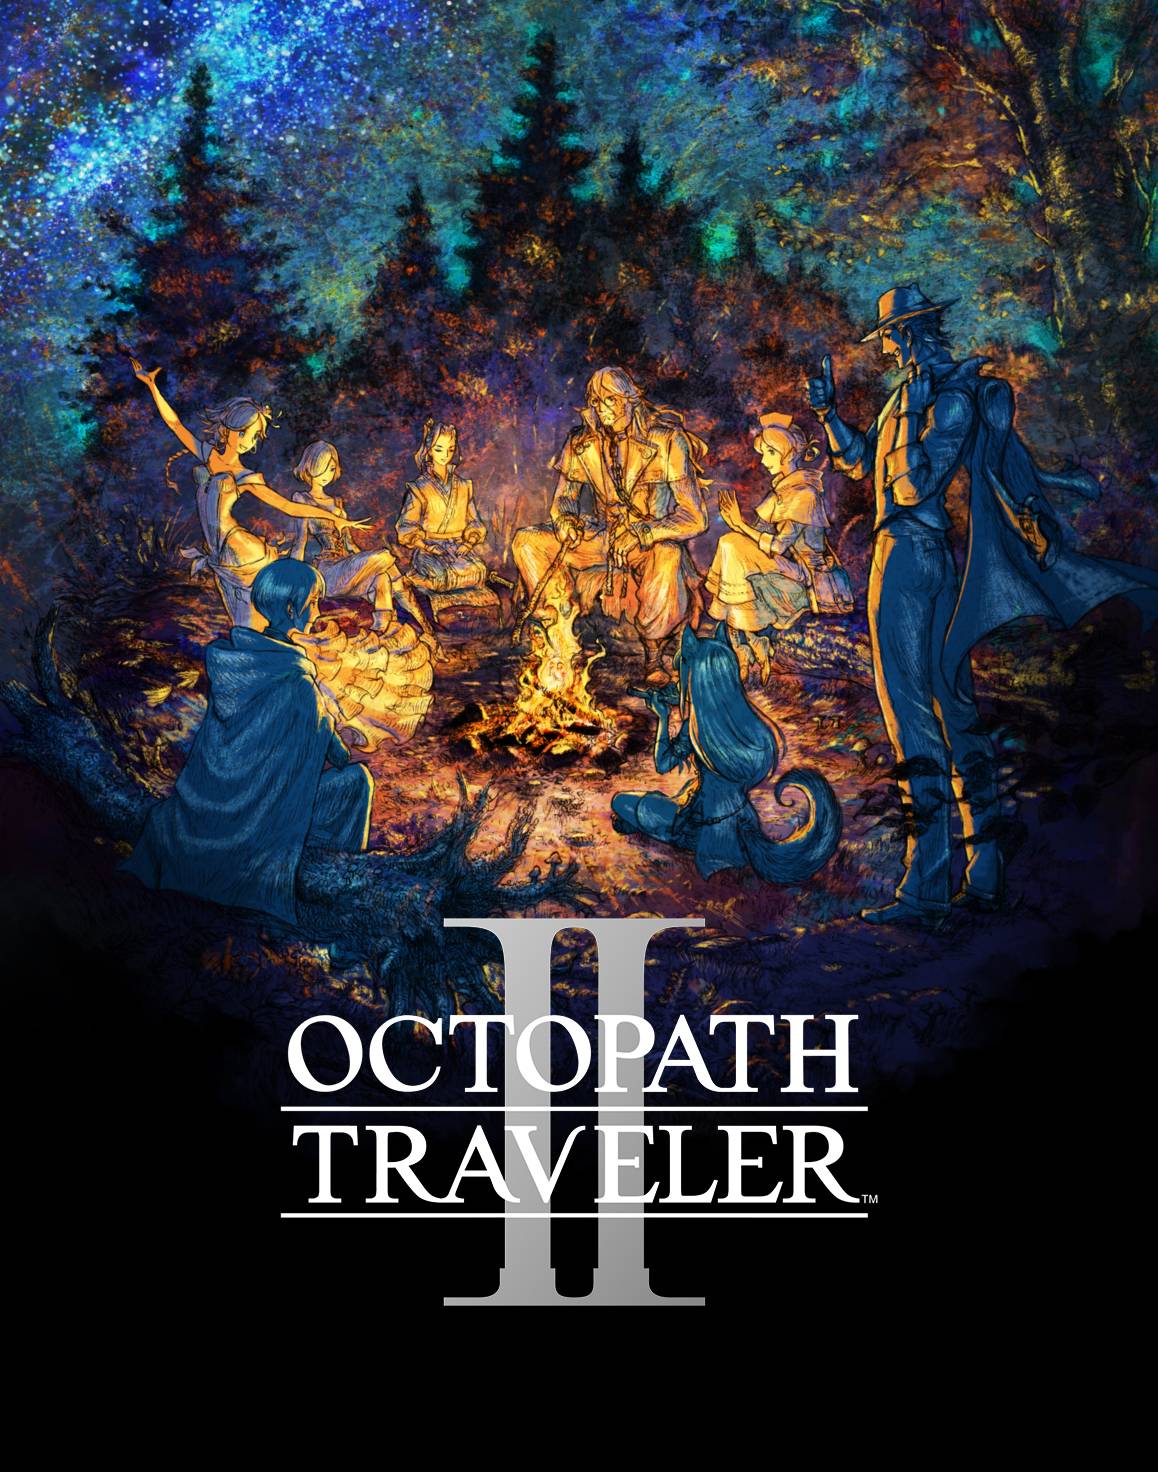 《Octopath Traveler II》最终宣传影片公开！「序章体验版」现已开放玩家试玩！